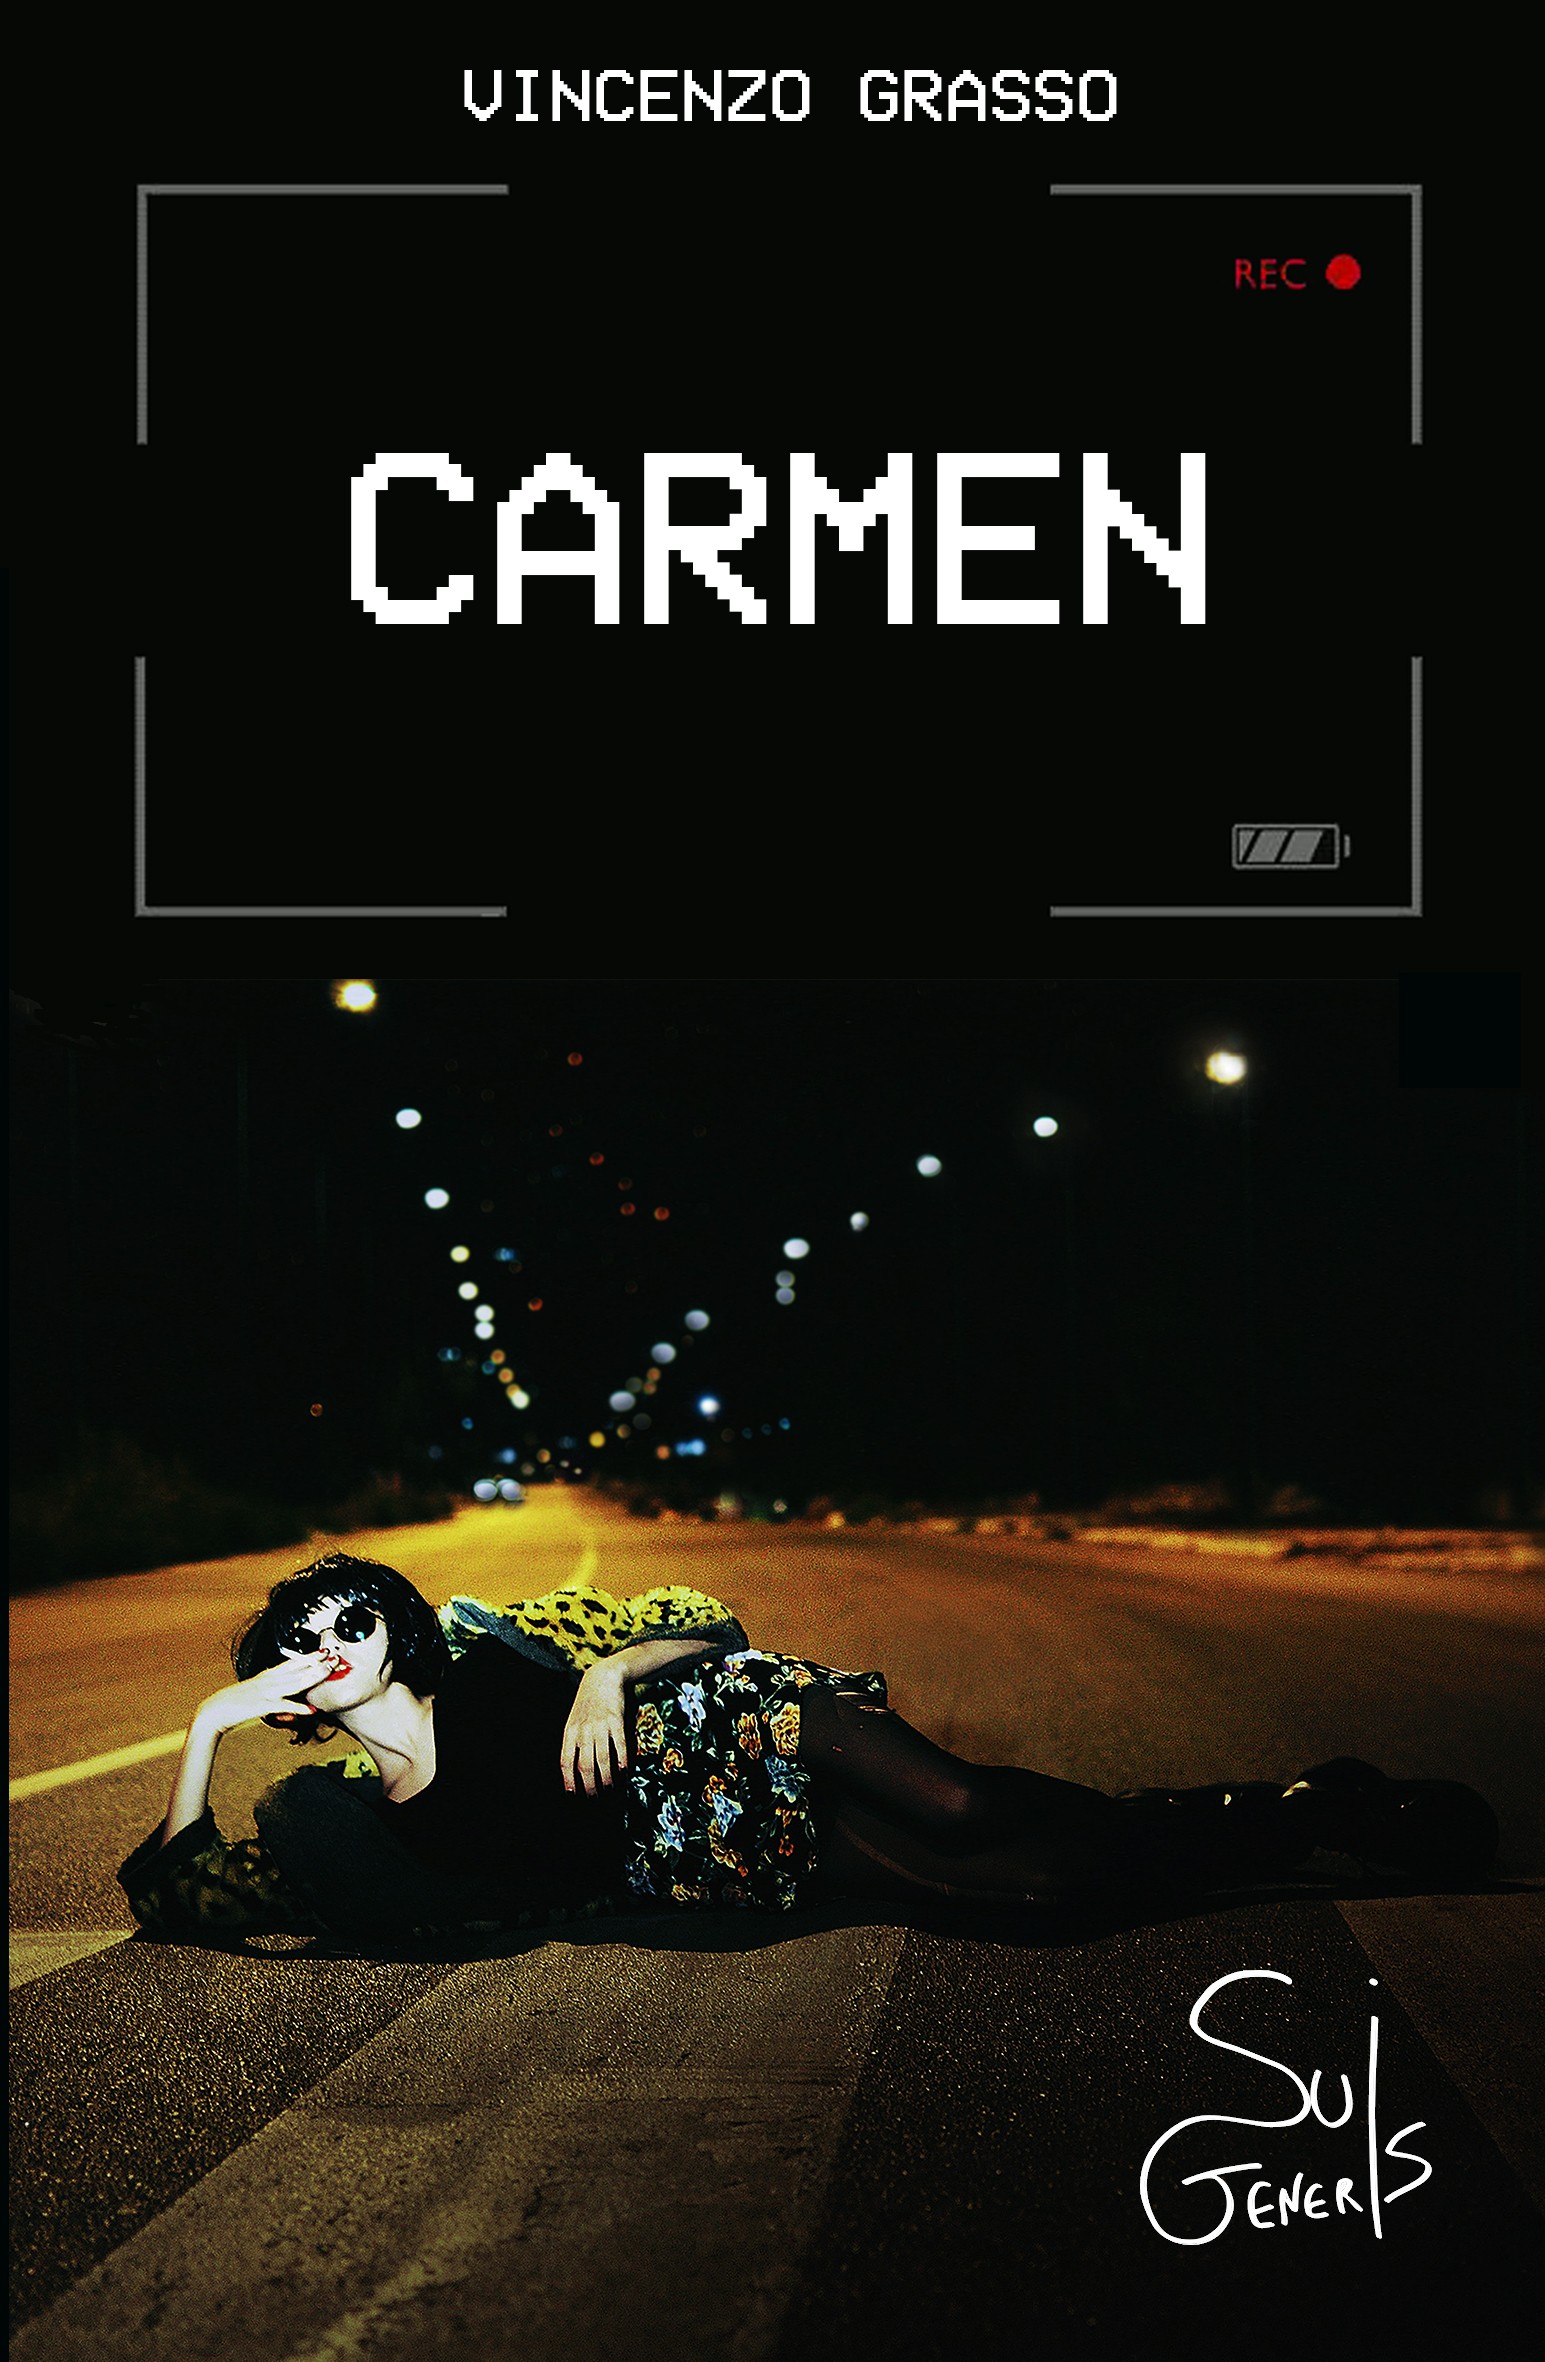 Carmen - Librerie.coop